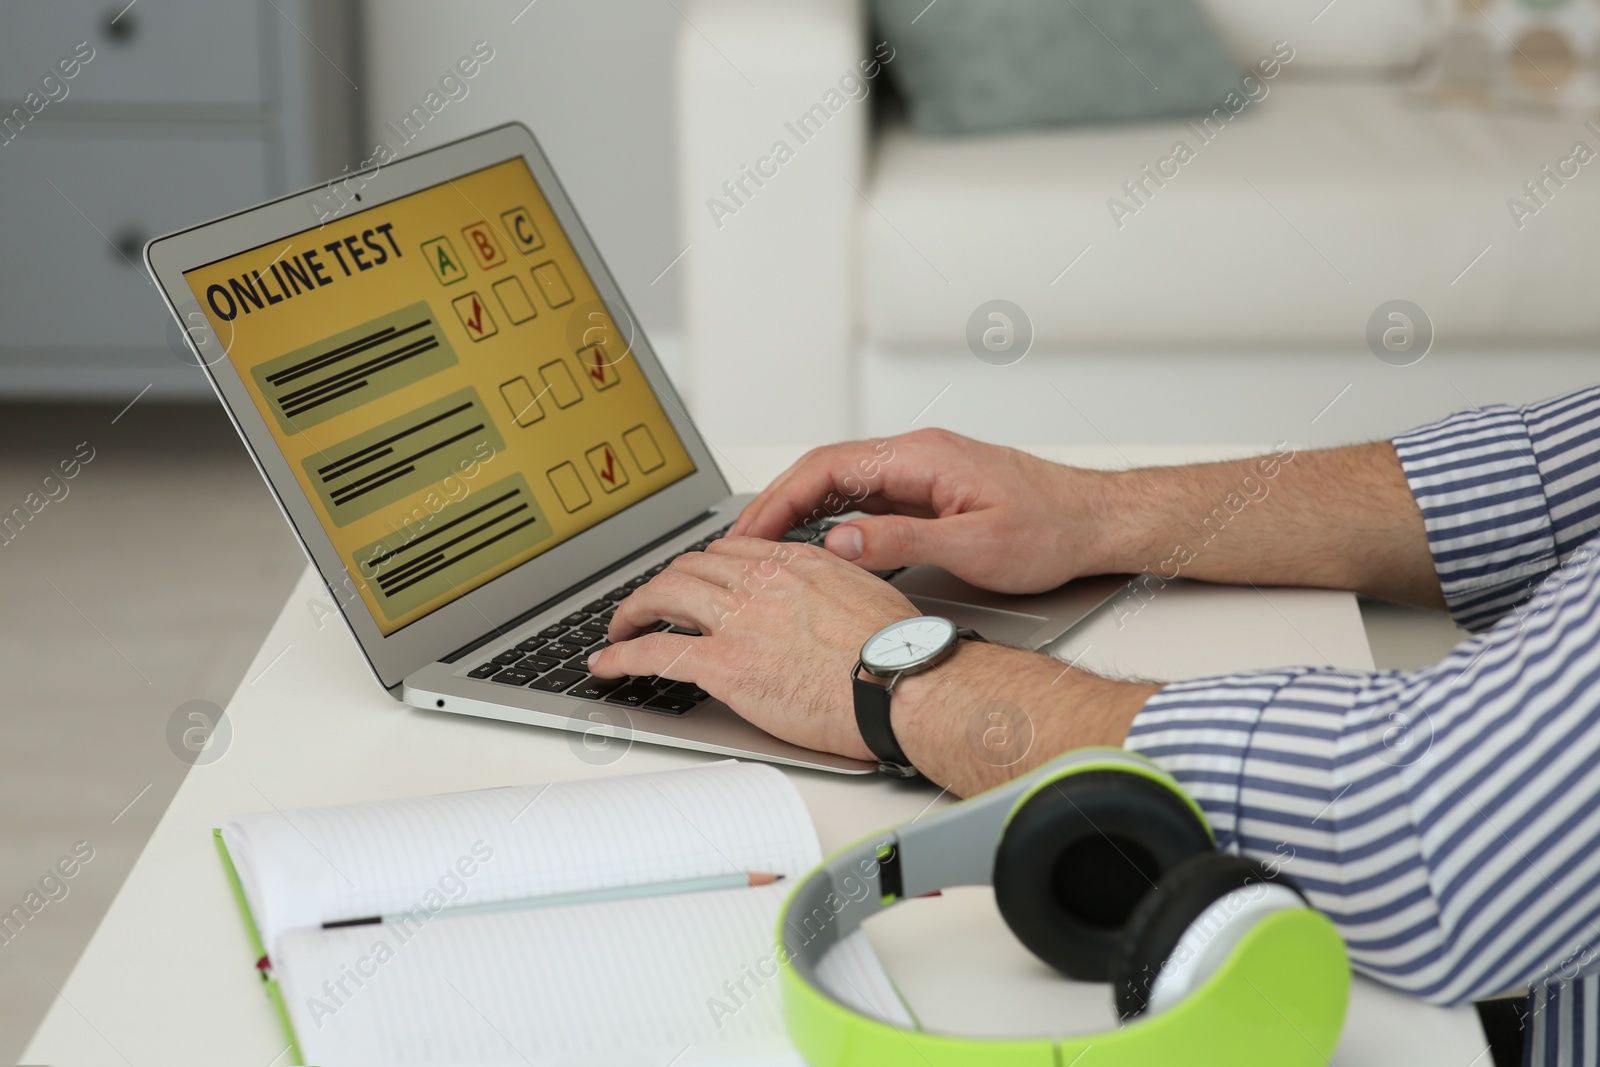 Photo of Man taking online test on laptop at desk indoors, closeup